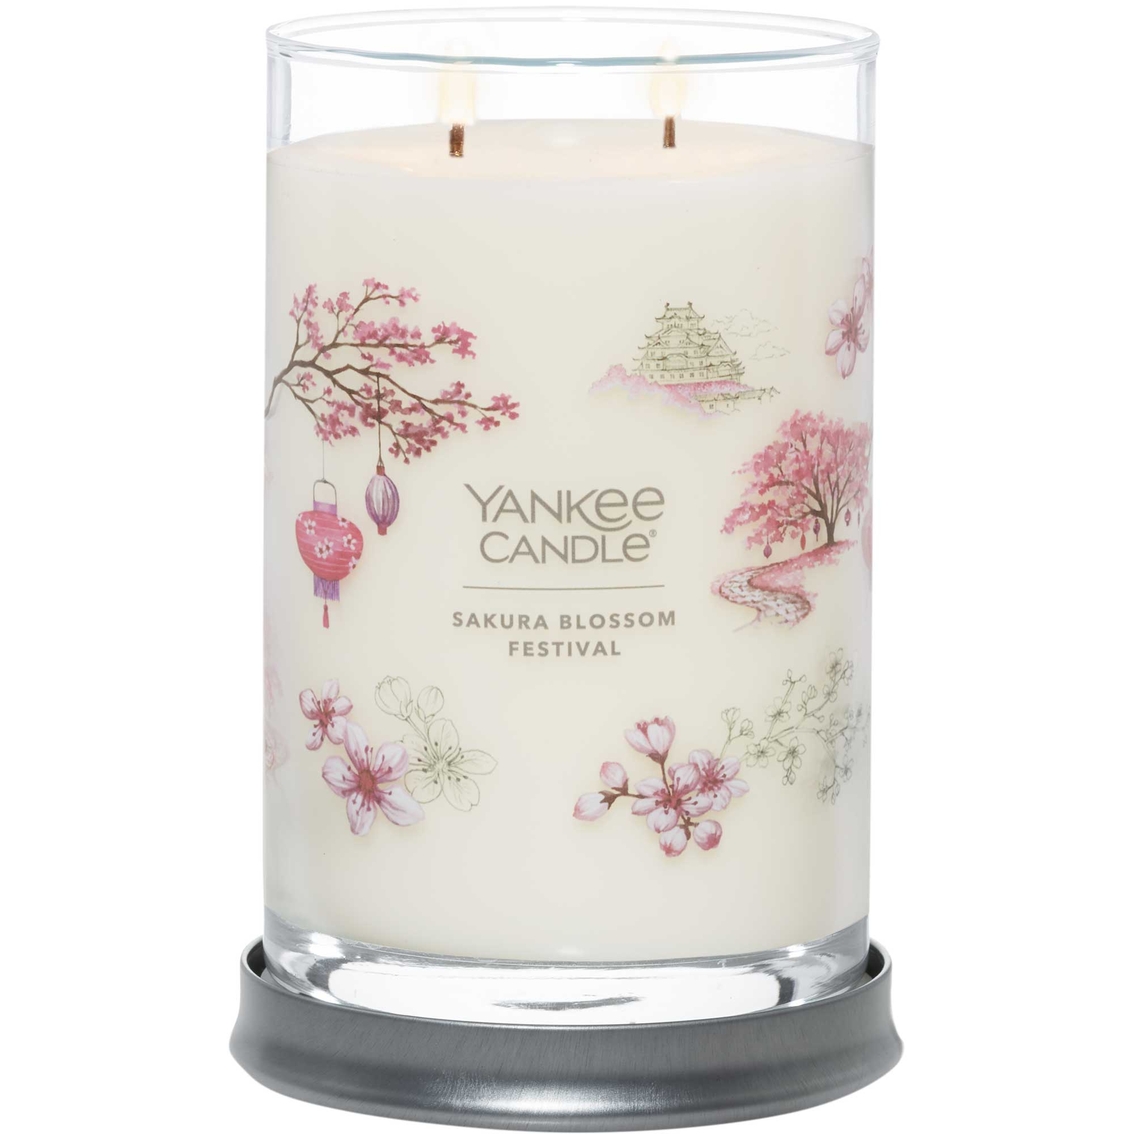 Yankee Candle Sakura Blossom Festival Signature Large Tumbler Candle, Candles & Home Fragrance, Household